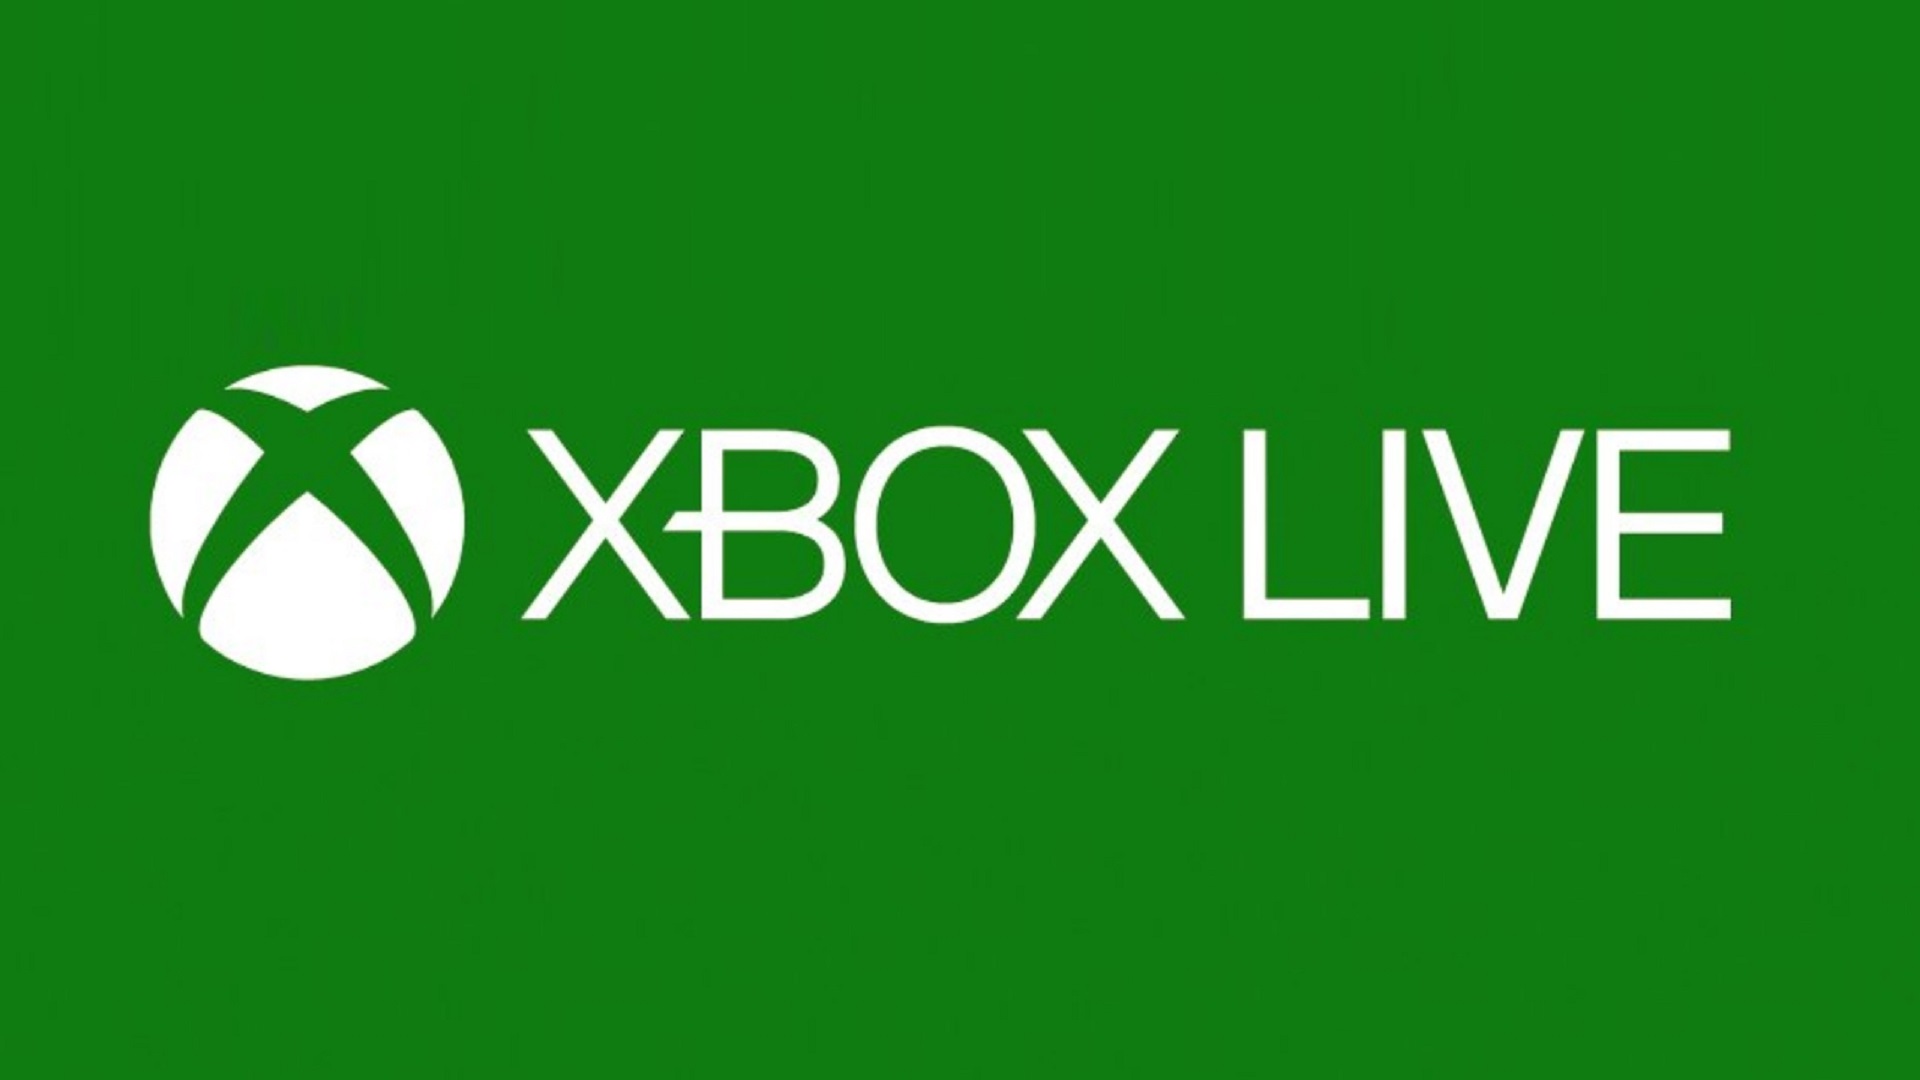 I-Xbox Live